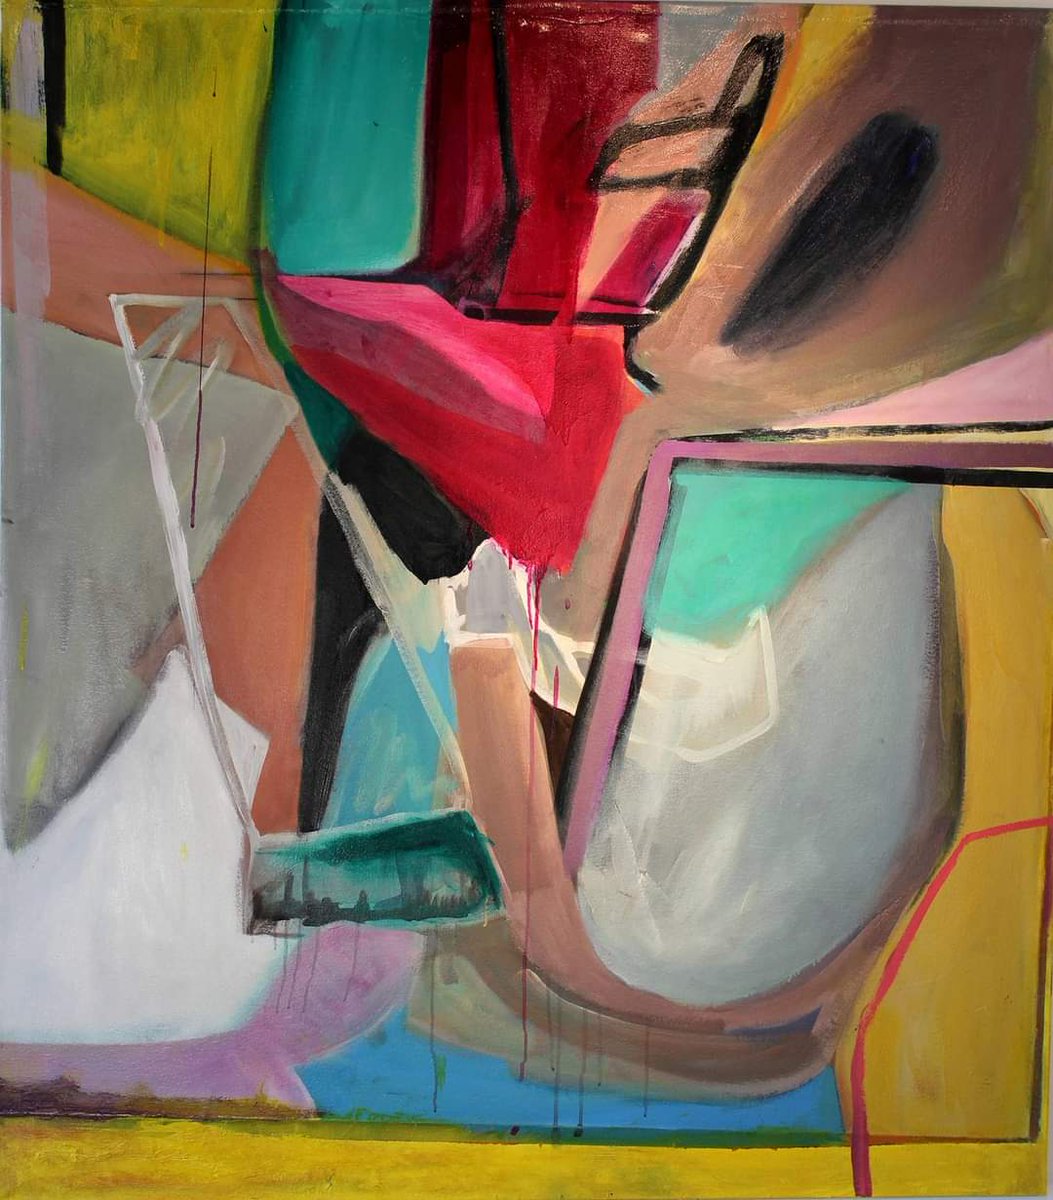 Jenny SR Lee 
In class 
#art #contemporaryart #abstractart #artist https://t.co/z5d7RqD5zI